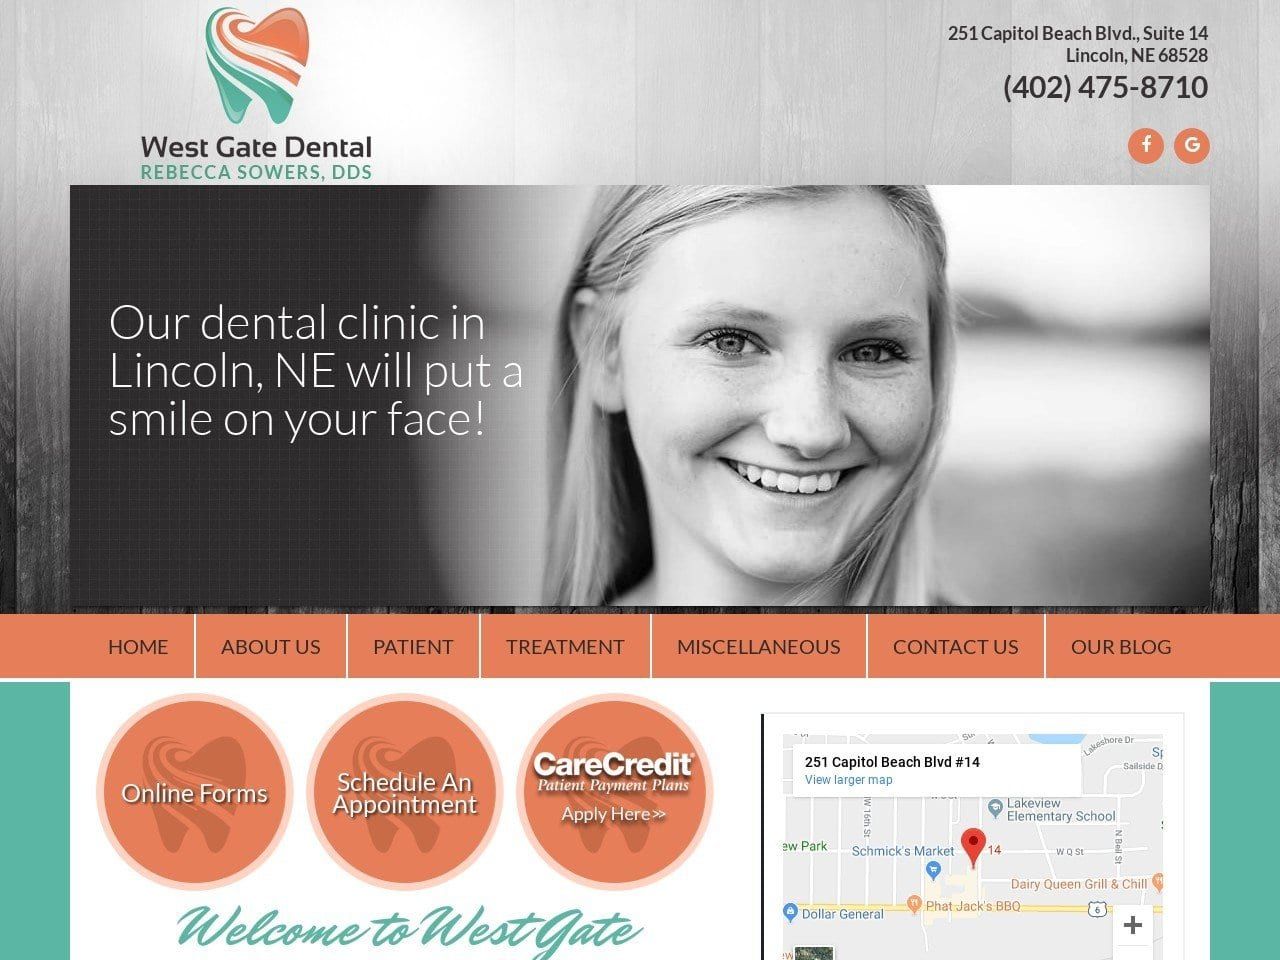 West Gate Dental Website Screenshot from westgatedentallincoln.com